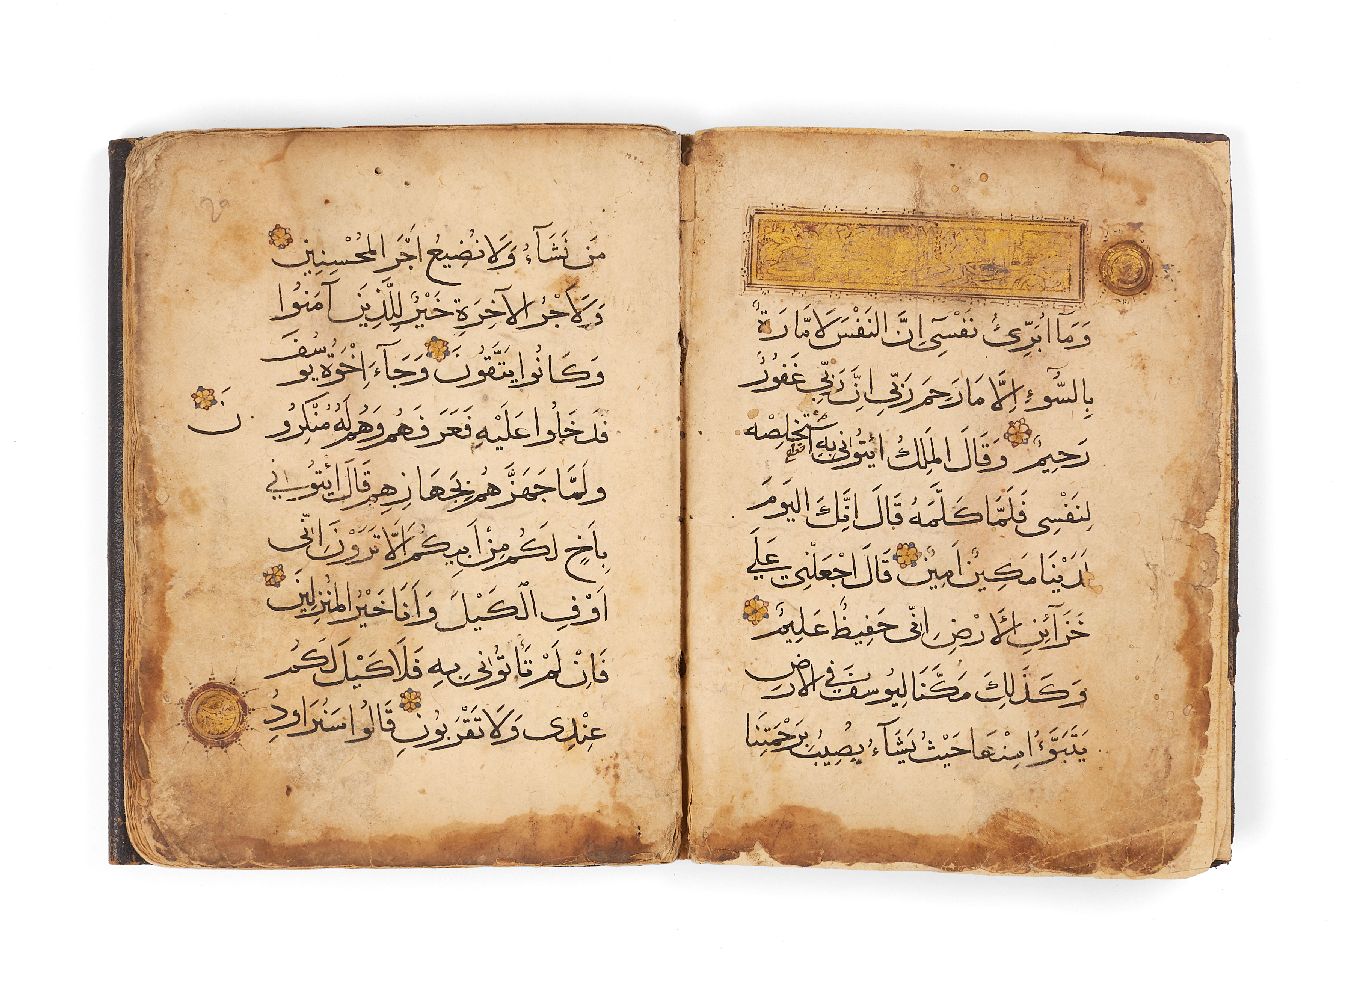 Ɵ Section of a Mamluk Qur'anic Juz', in Arabic, illuminated manuscript on paper